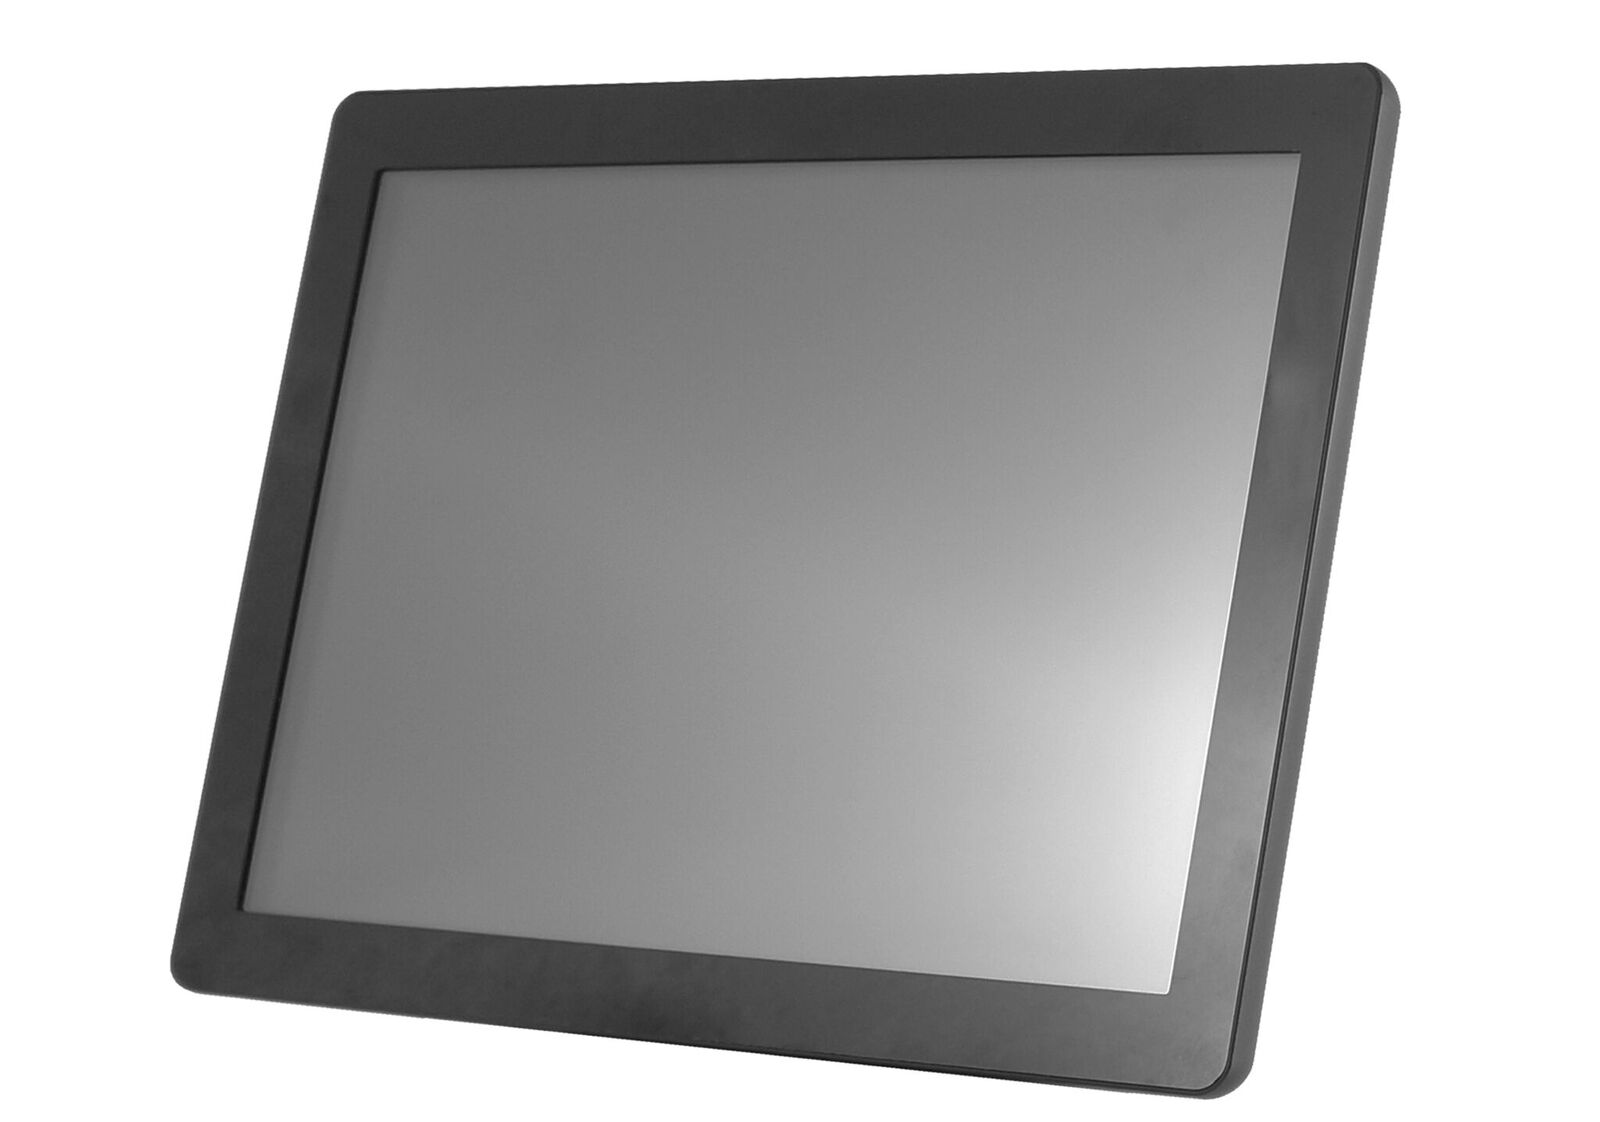 8" Glass display - 800x600, 250nt, CAP, VGA